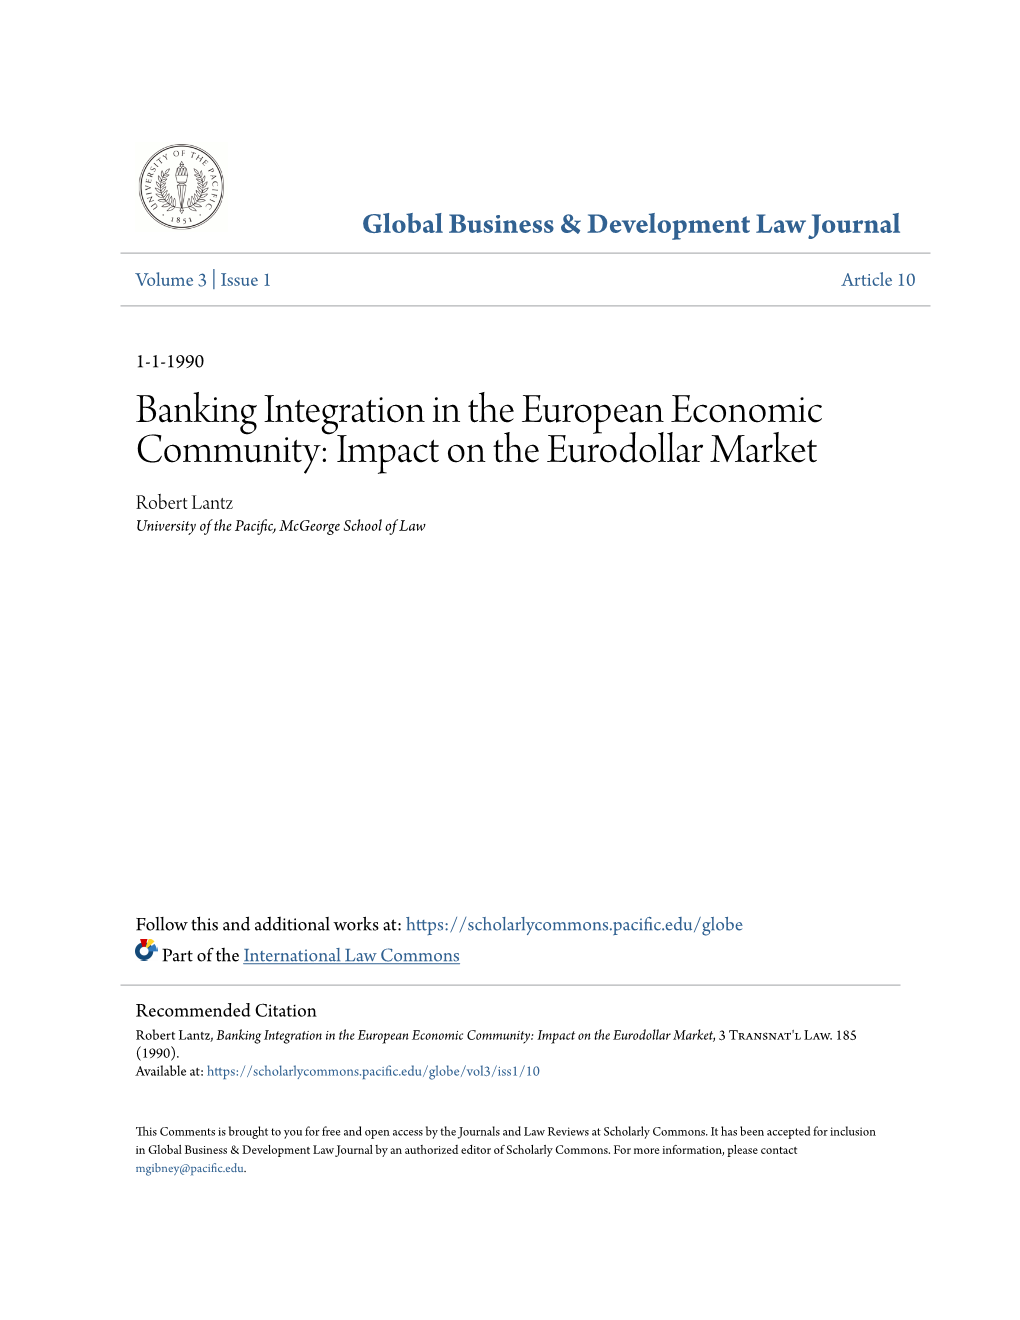 Banking Integration in the European Economic Community: Impact on the Eurodollar Market Robert Lantz University of the Pacific, Mcgeorge School of Law